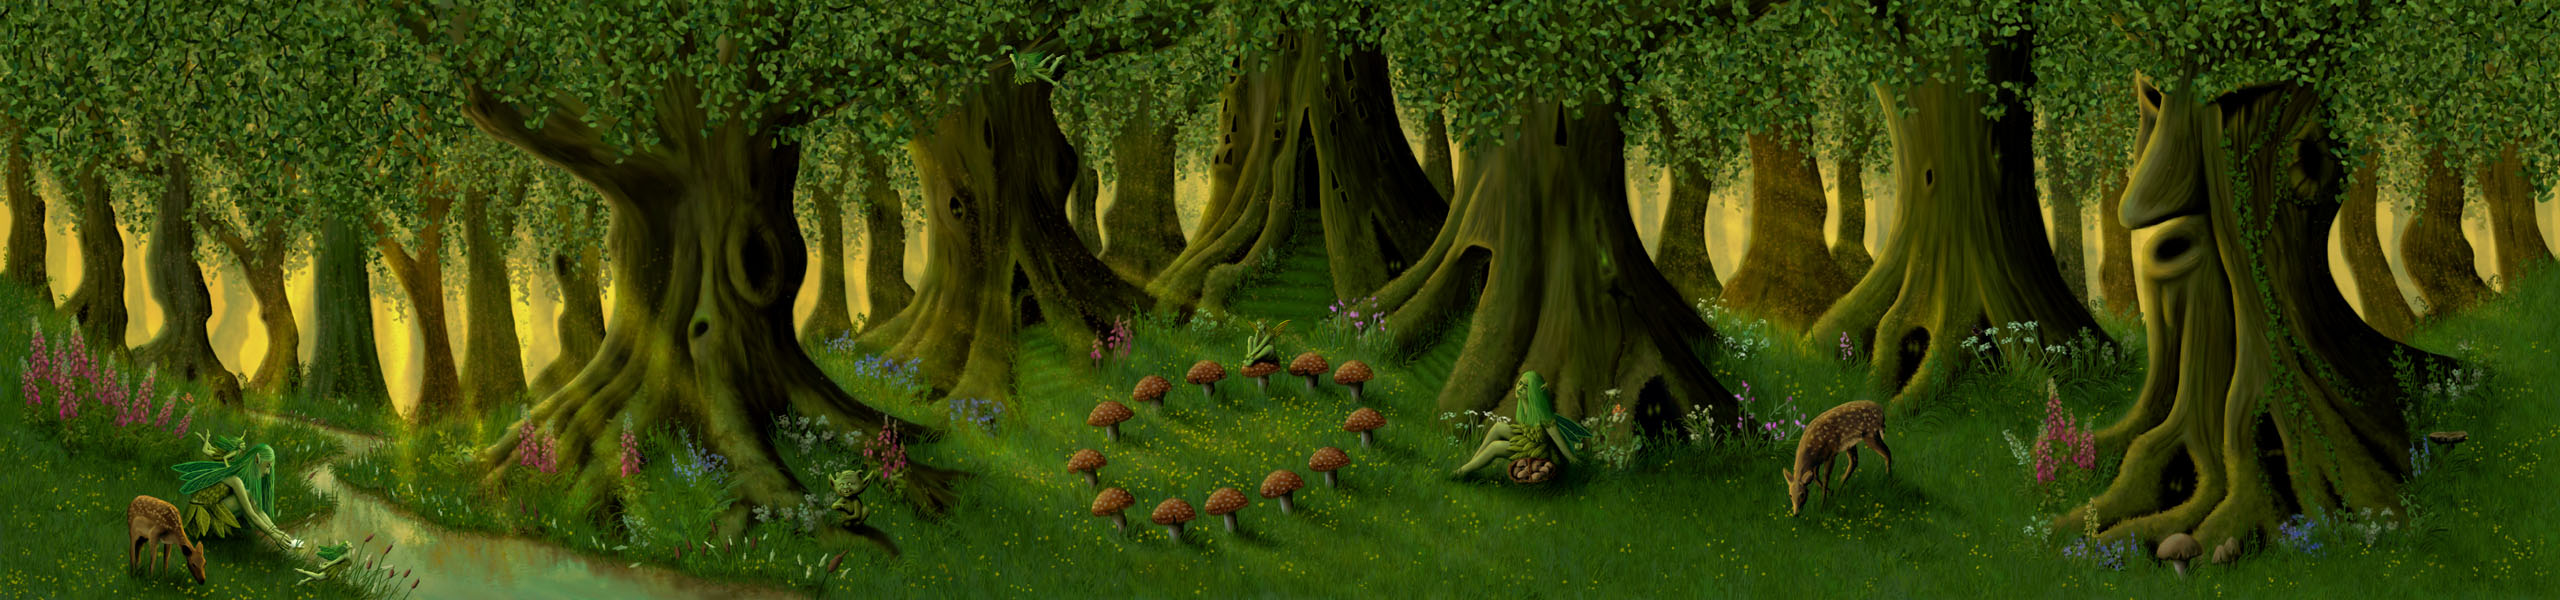 Faerie Woodland Fantasy Illustration